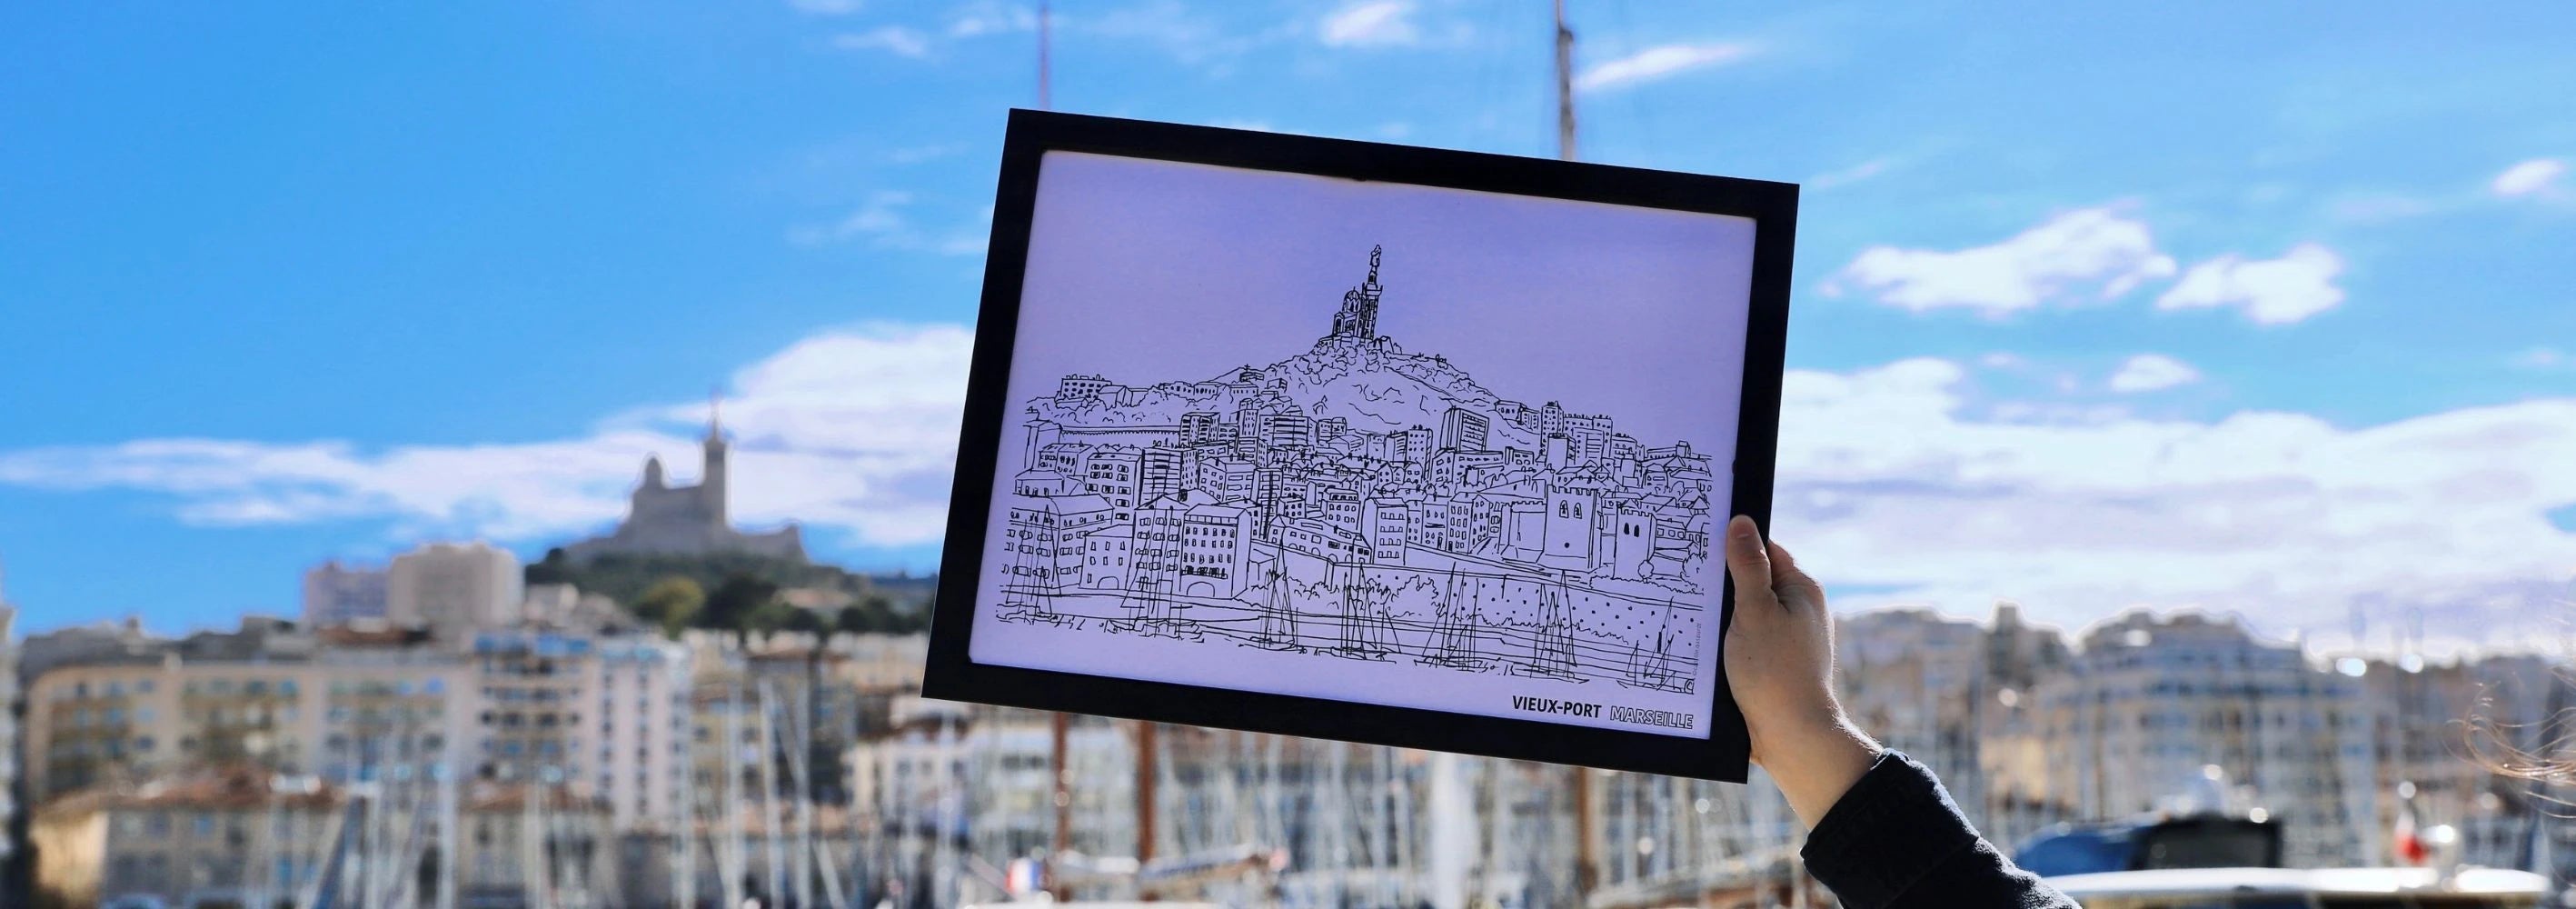 Affiche vieux port Marseille